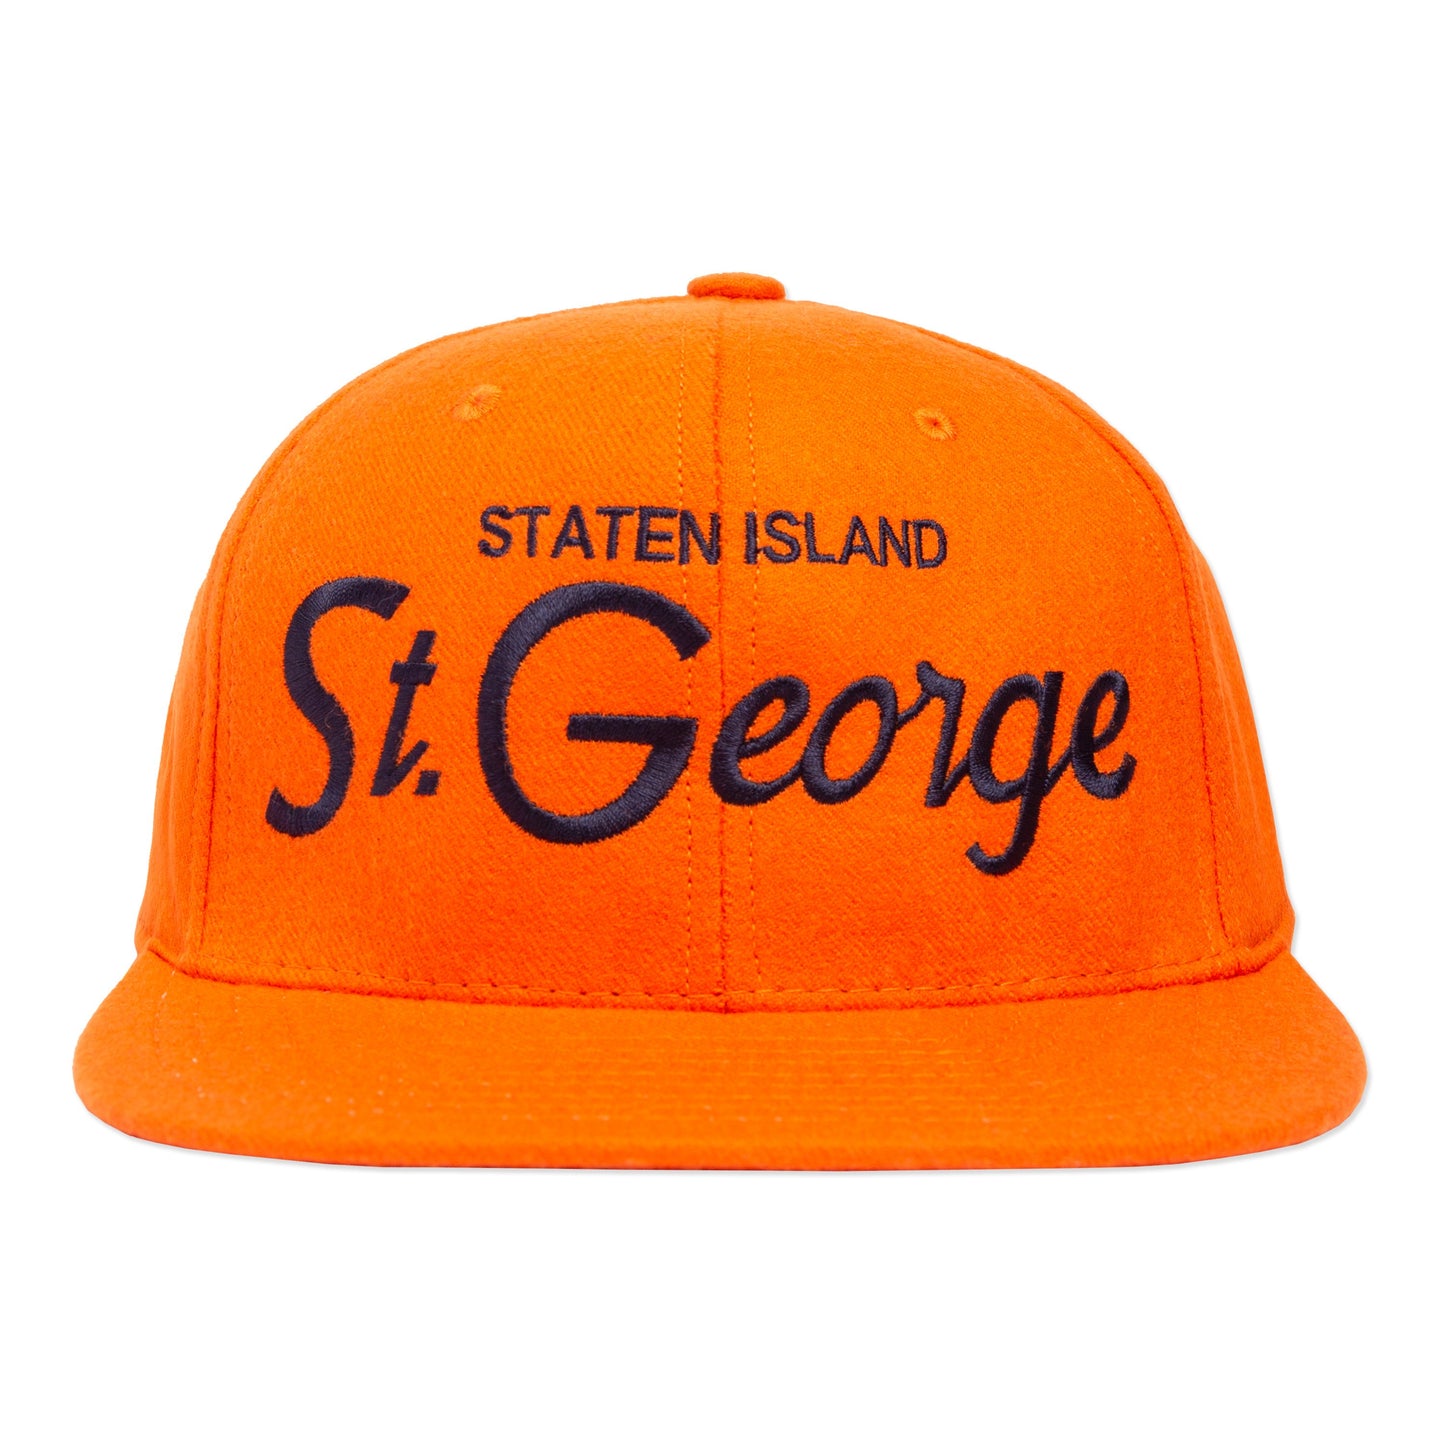 St. George Snapback Hat